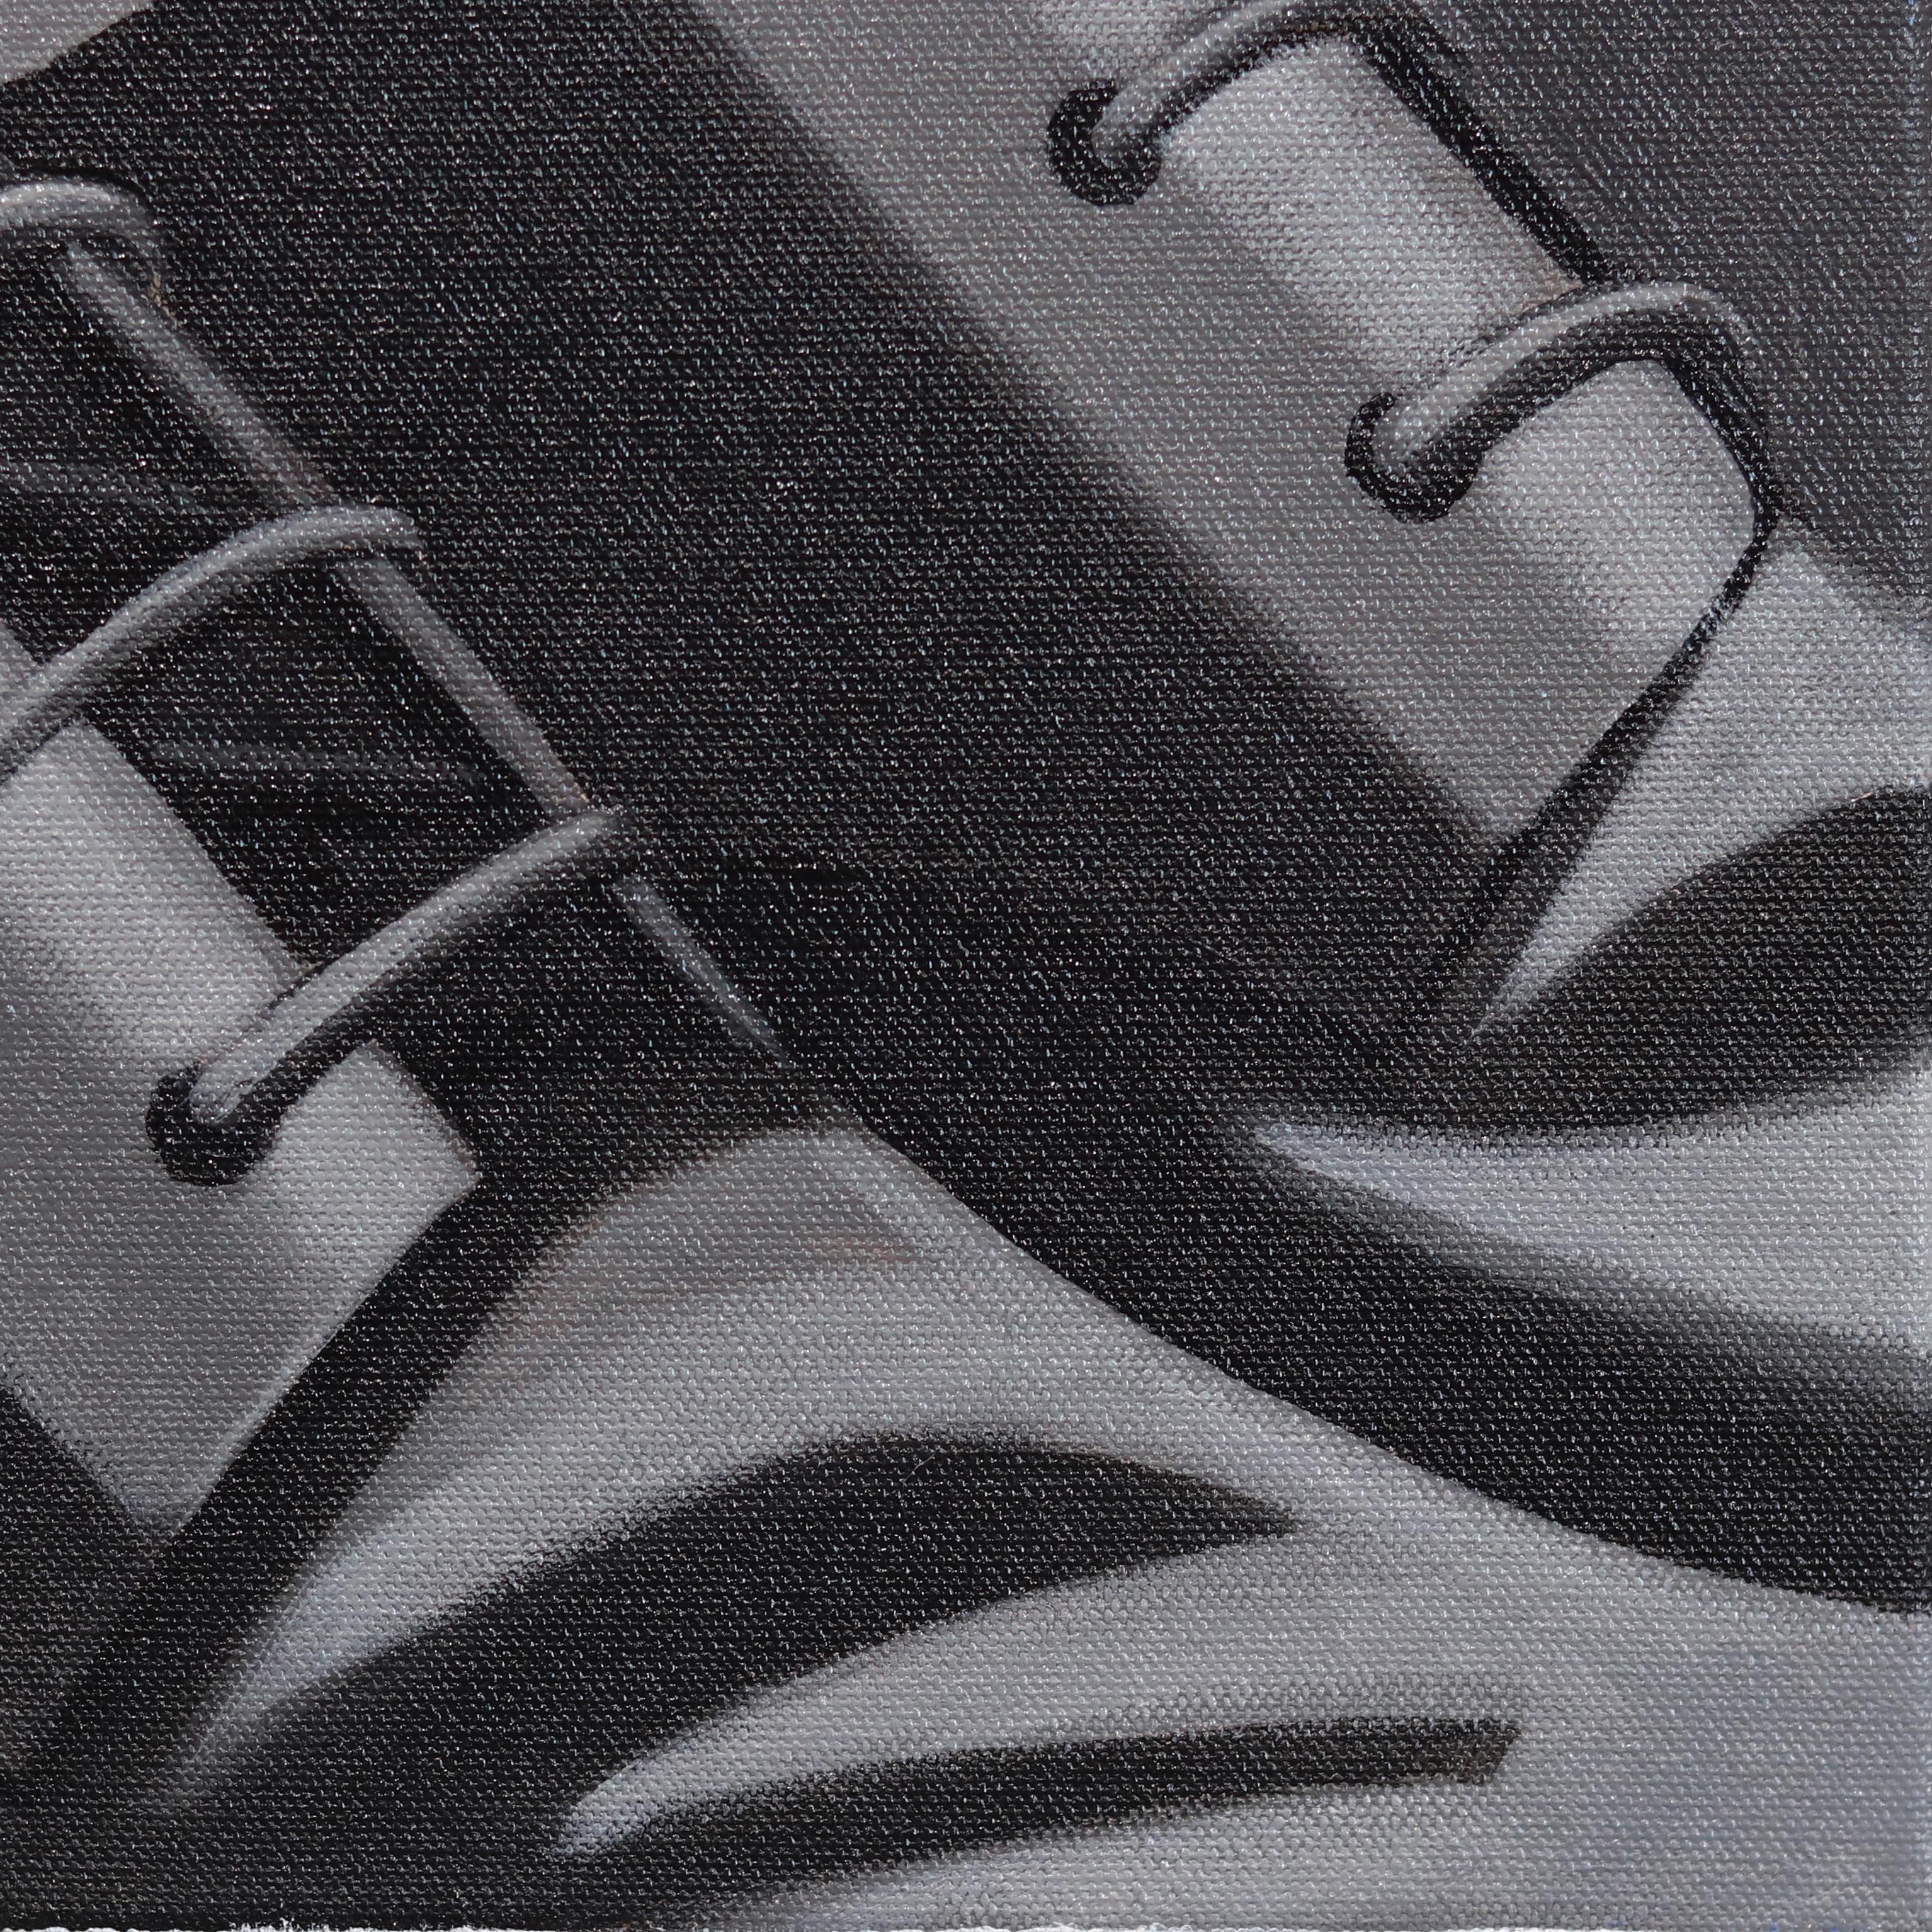 The White Socks - Pop Art Minimalist Monochrome Original Artwork on Canvas For Sale 7